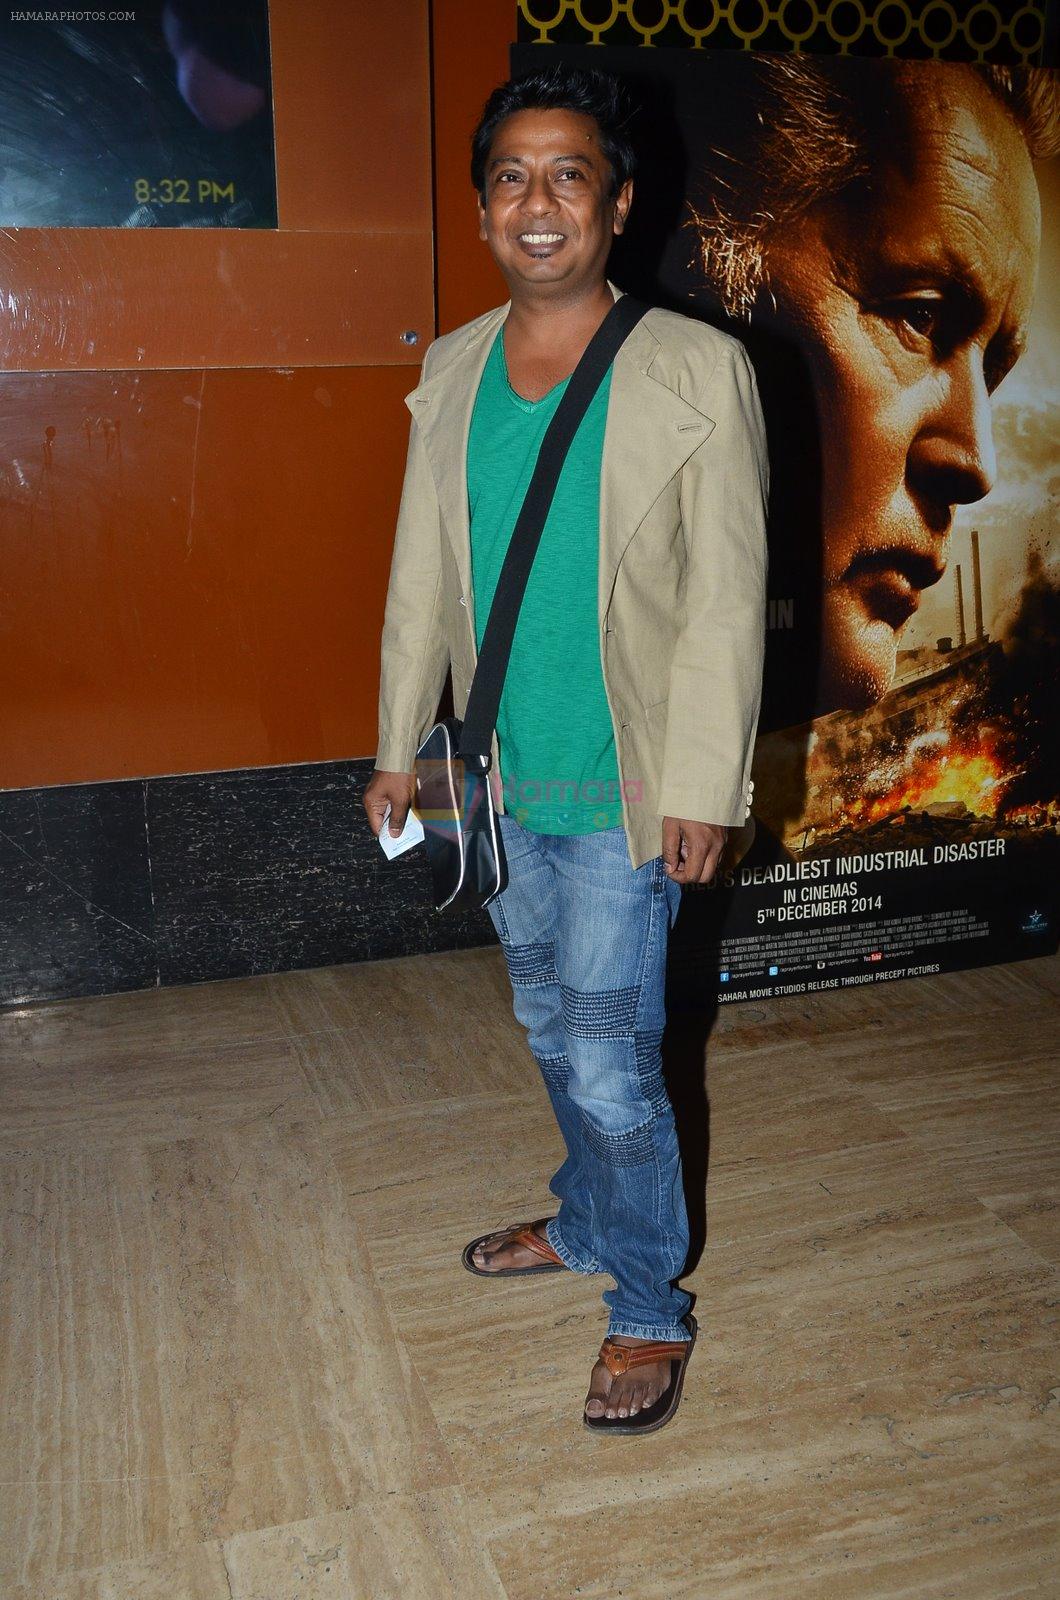 Onir at Bhopal film premiere in Mumbai on 4th Dec 2014